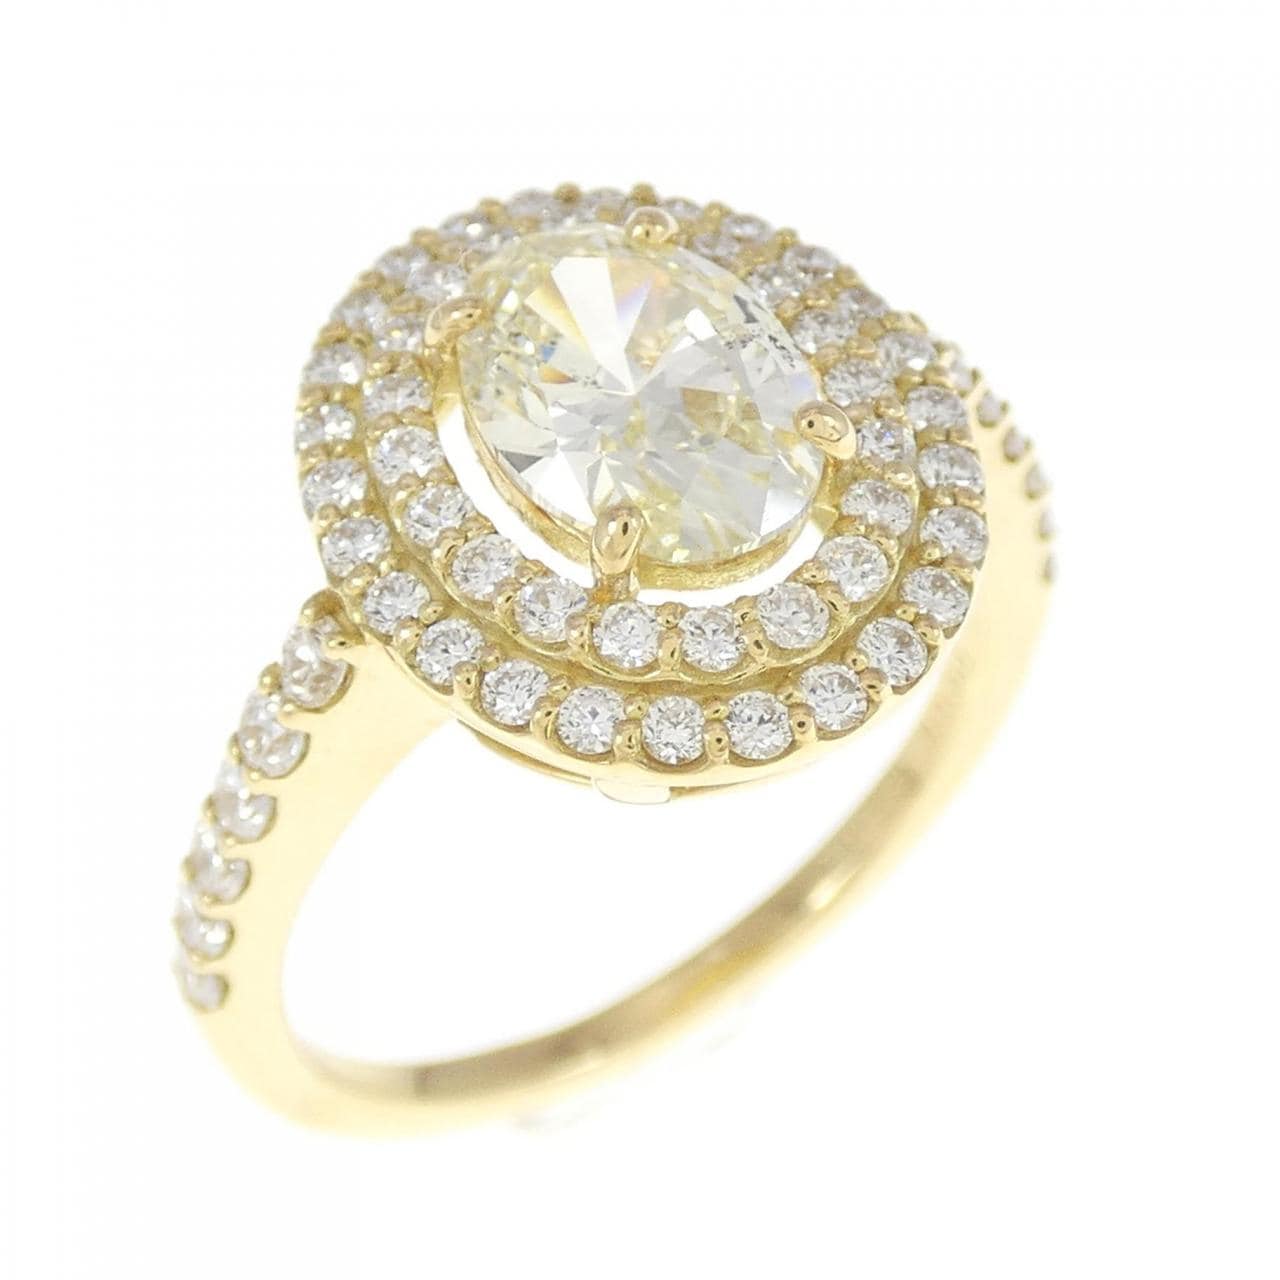 [Remake] K18YG Diamond ring 1.038CT VLY SI1 oval cut